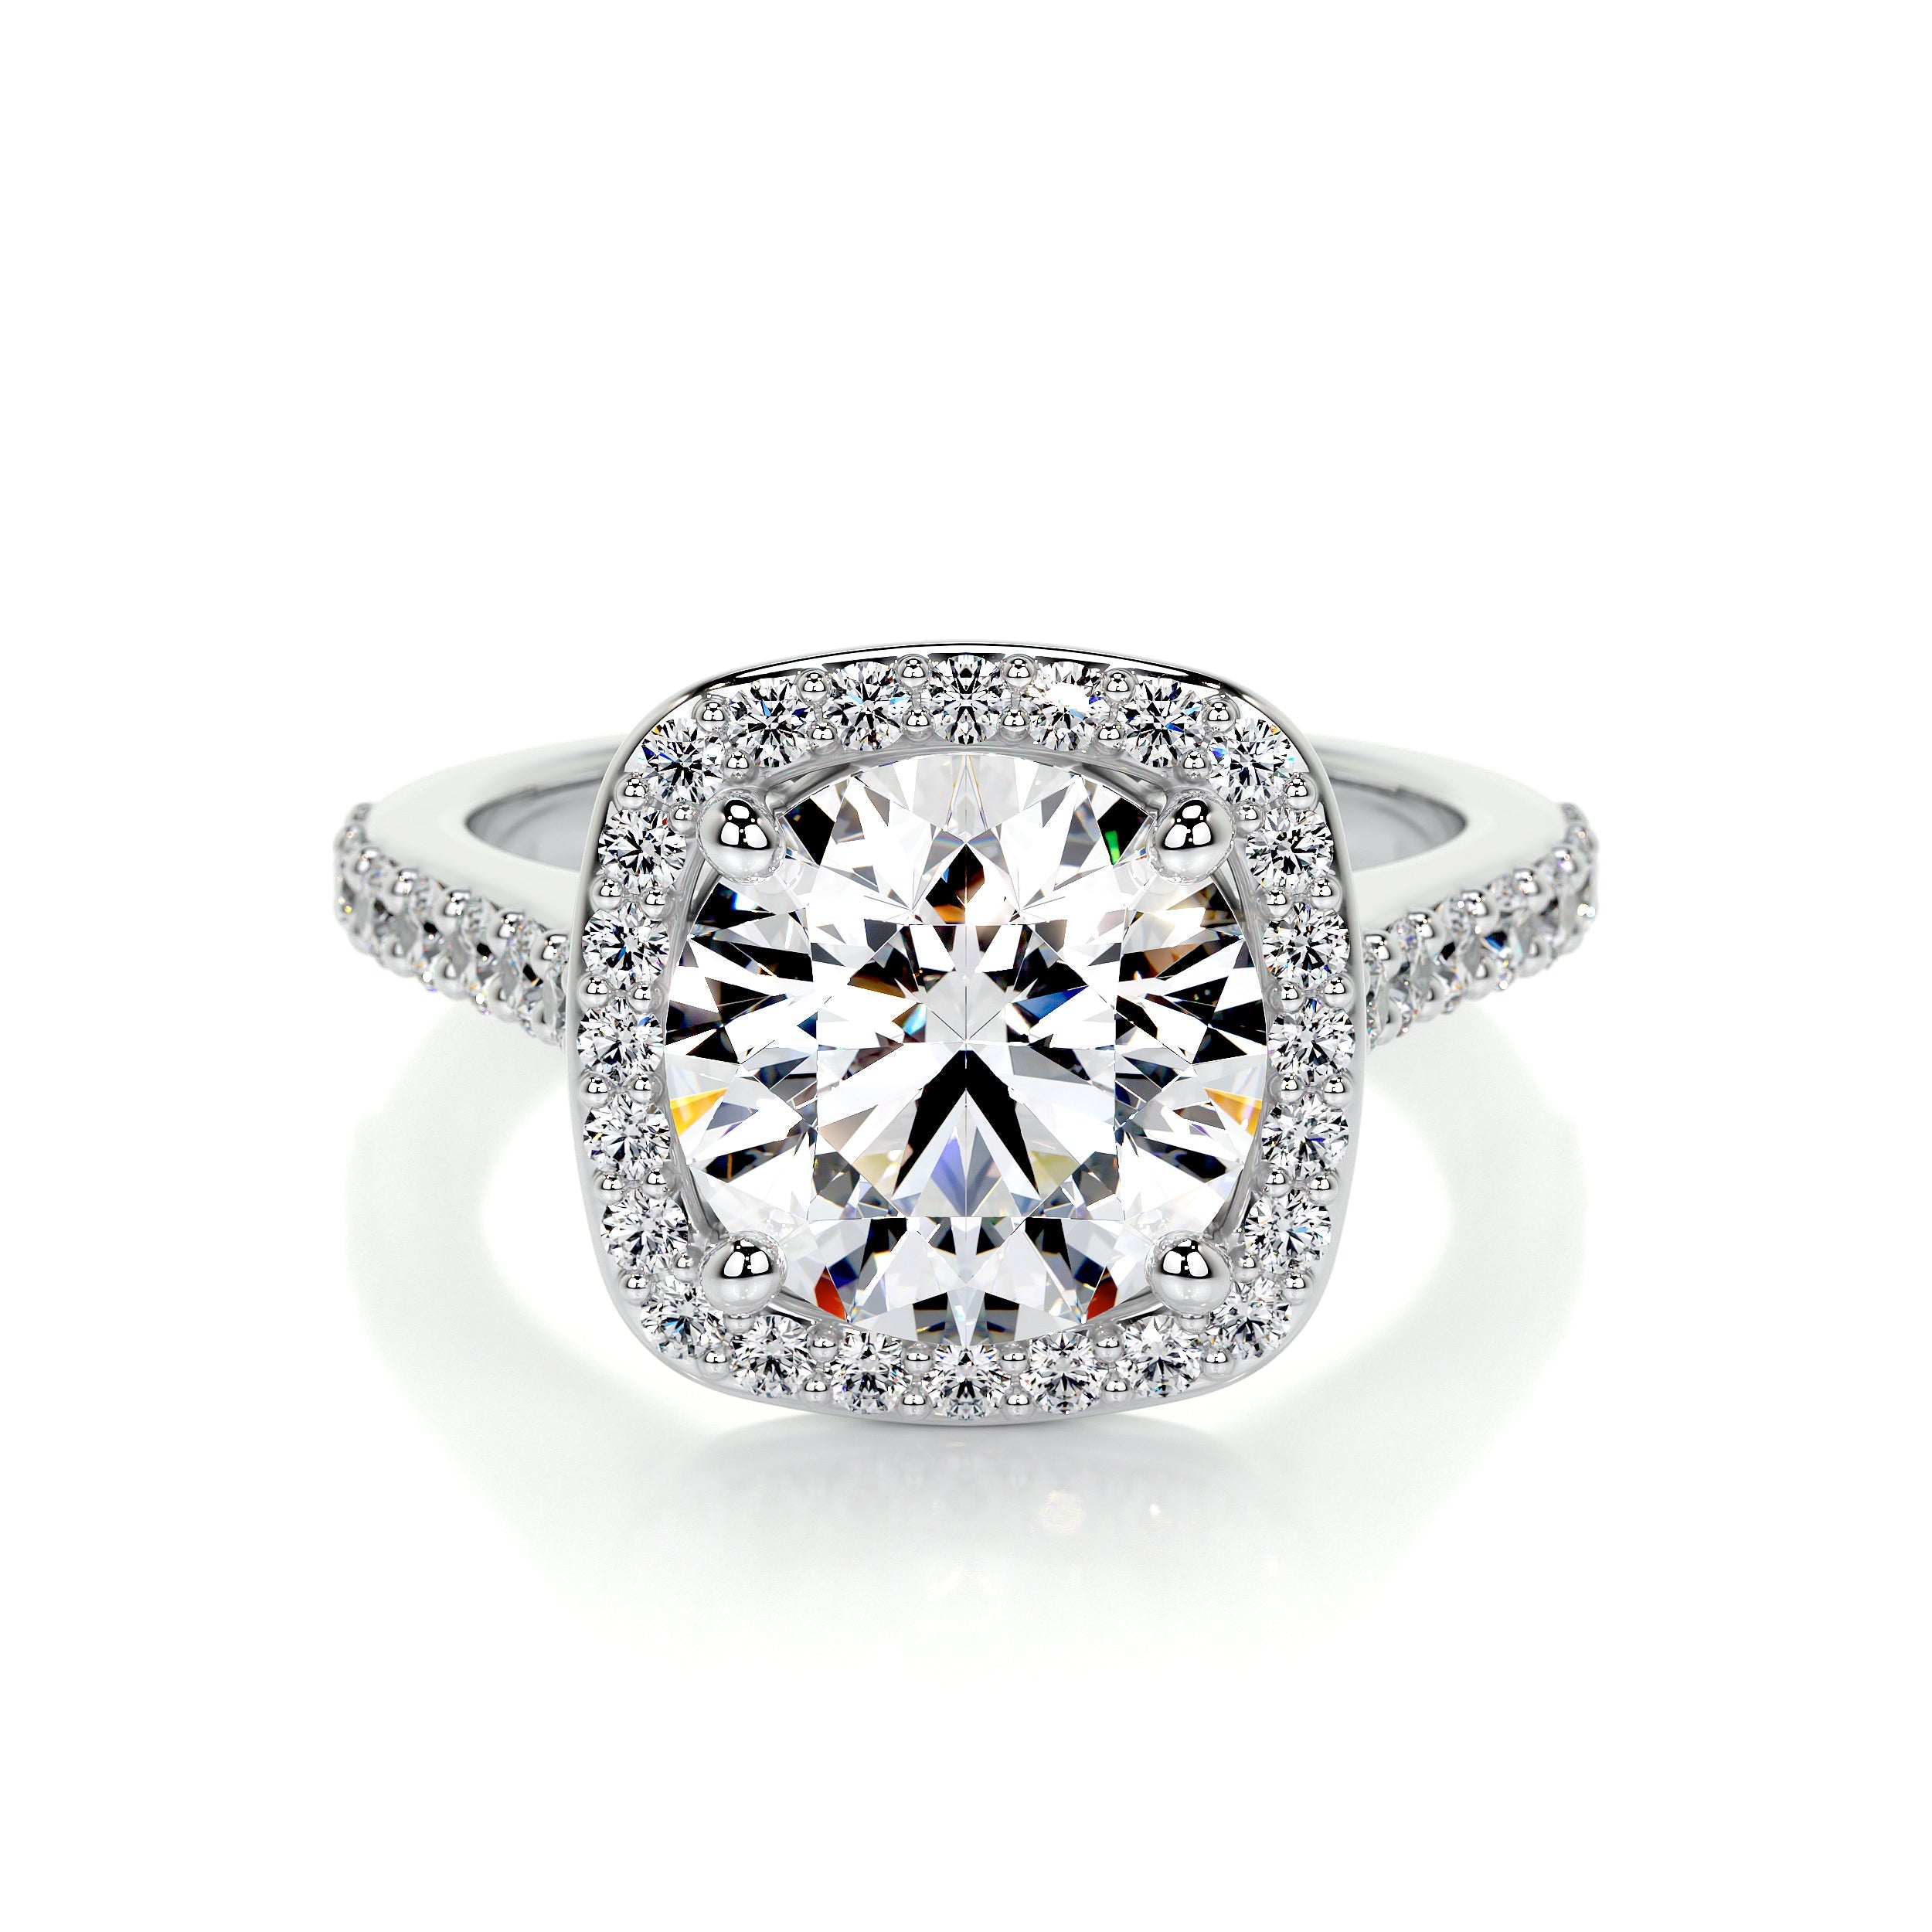 Aqua Diamond Solitaire Ring Milgrain Edge Wedding Ring For Her